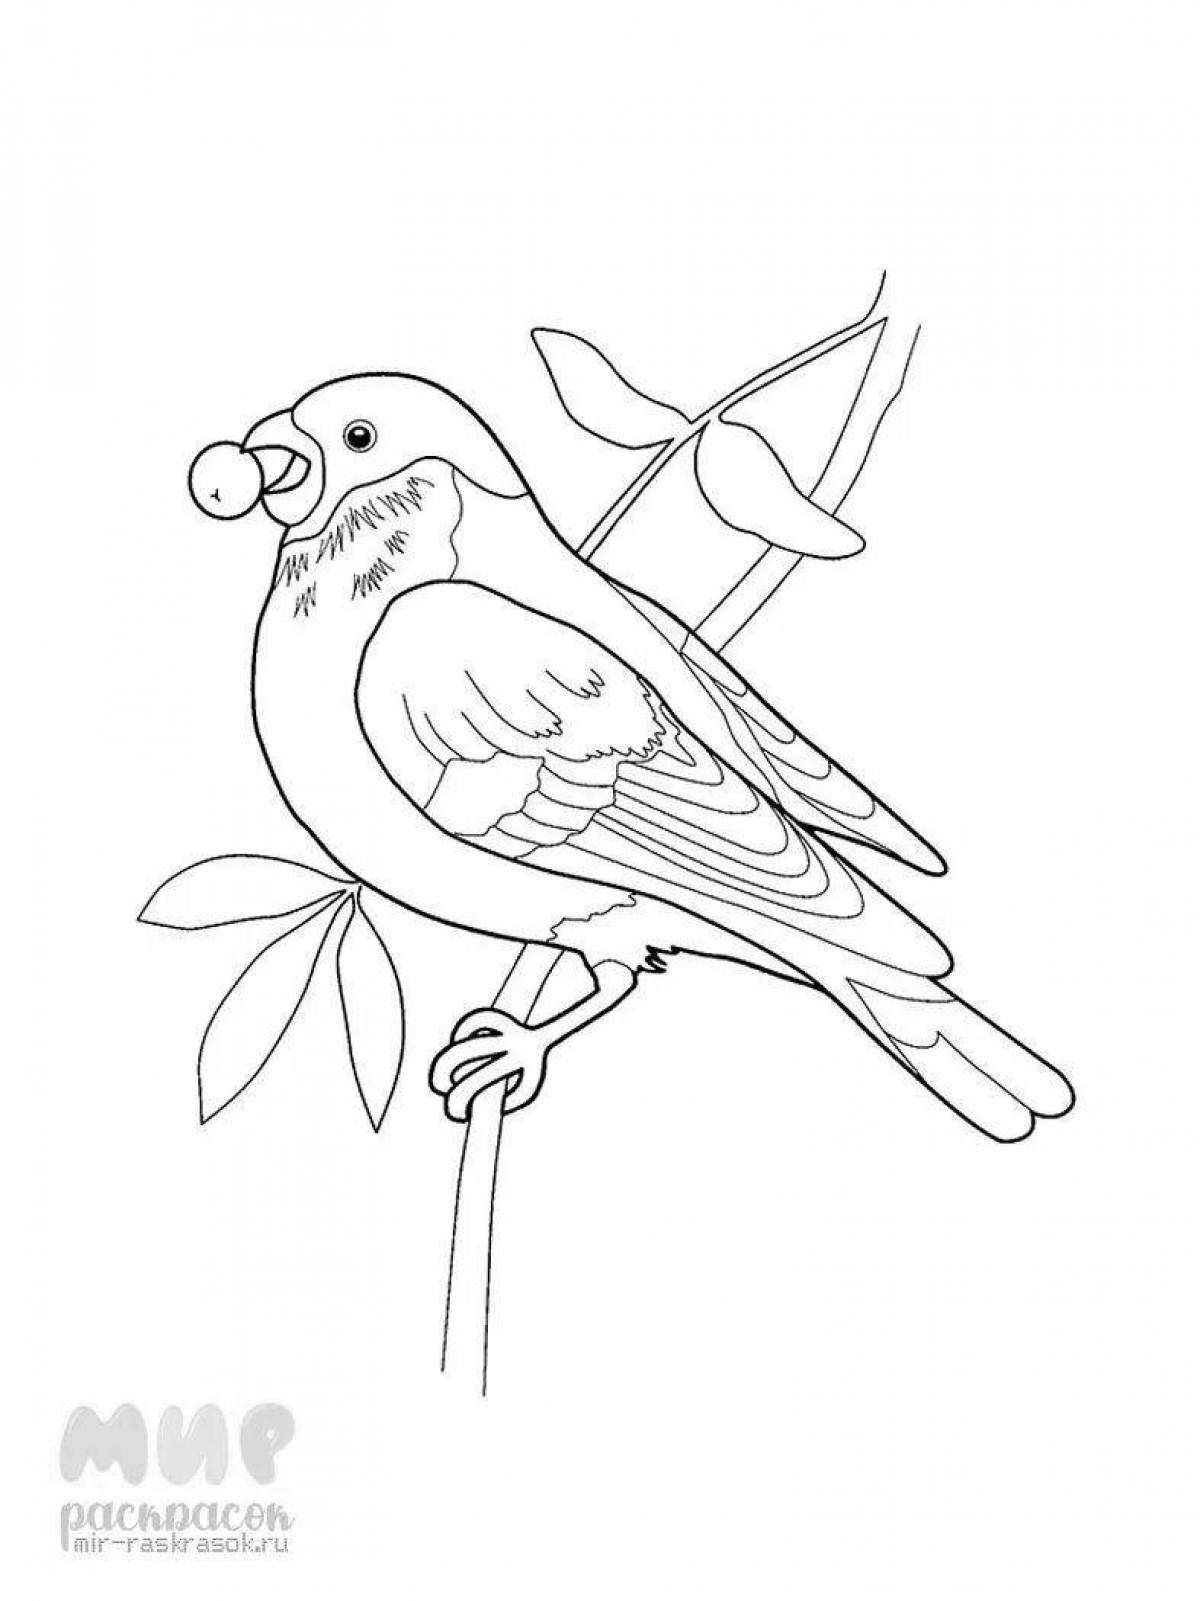 Cute bullfinch on a branch drawing